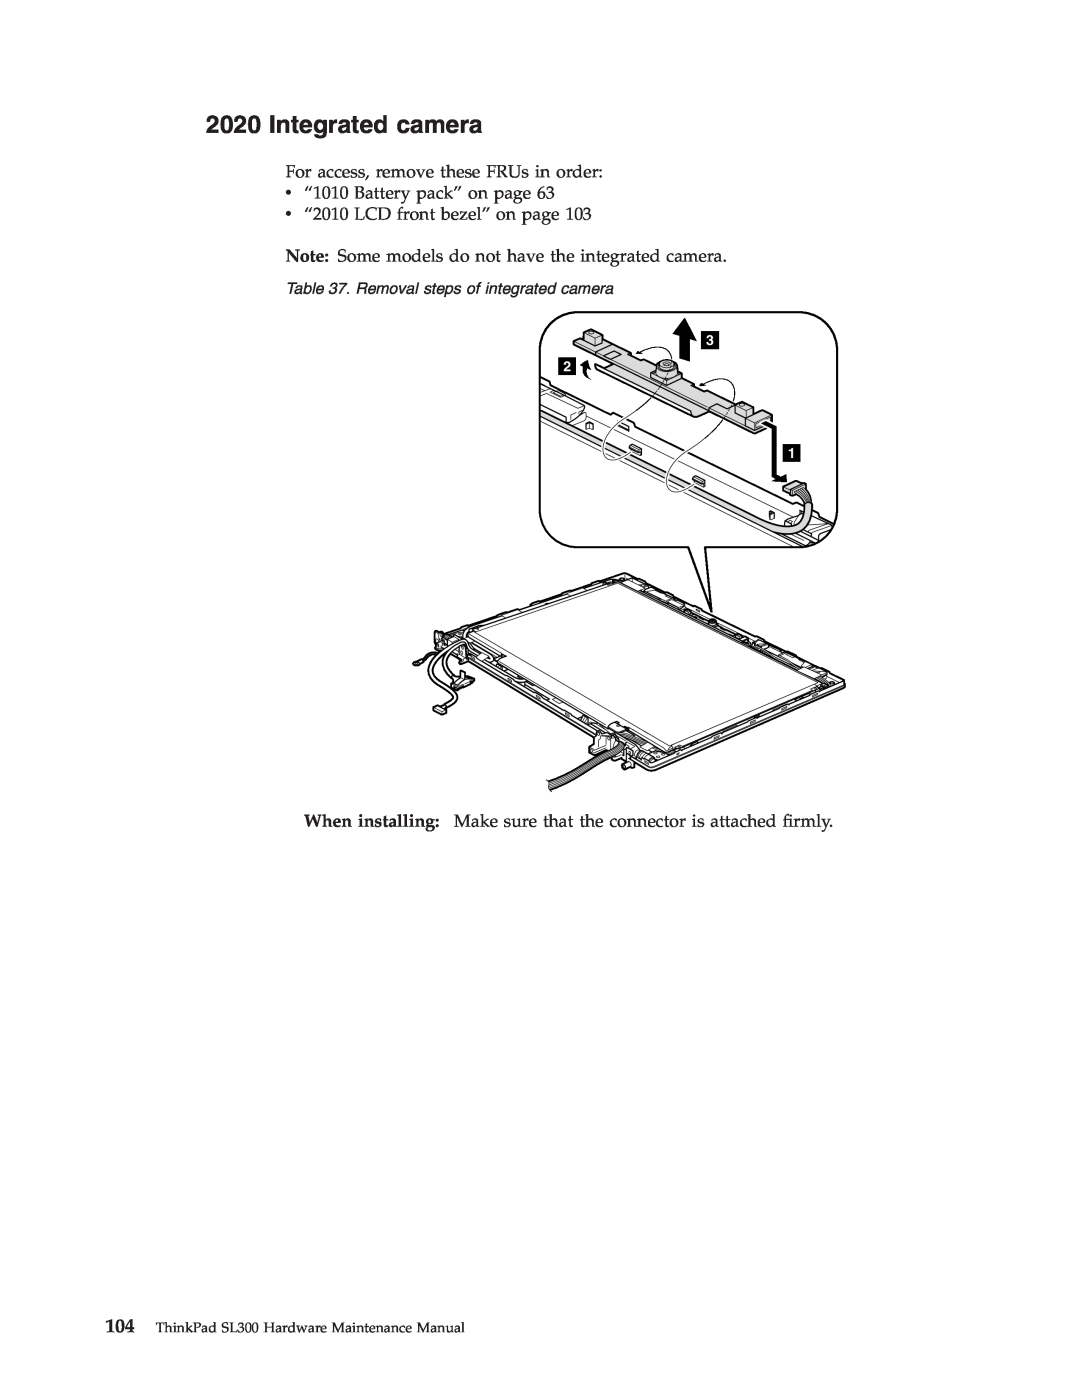 Lenovo manual Integrated camera, Removal steps of integrated camera, ThinkPad SL300 Hardware Maintenance Manual 